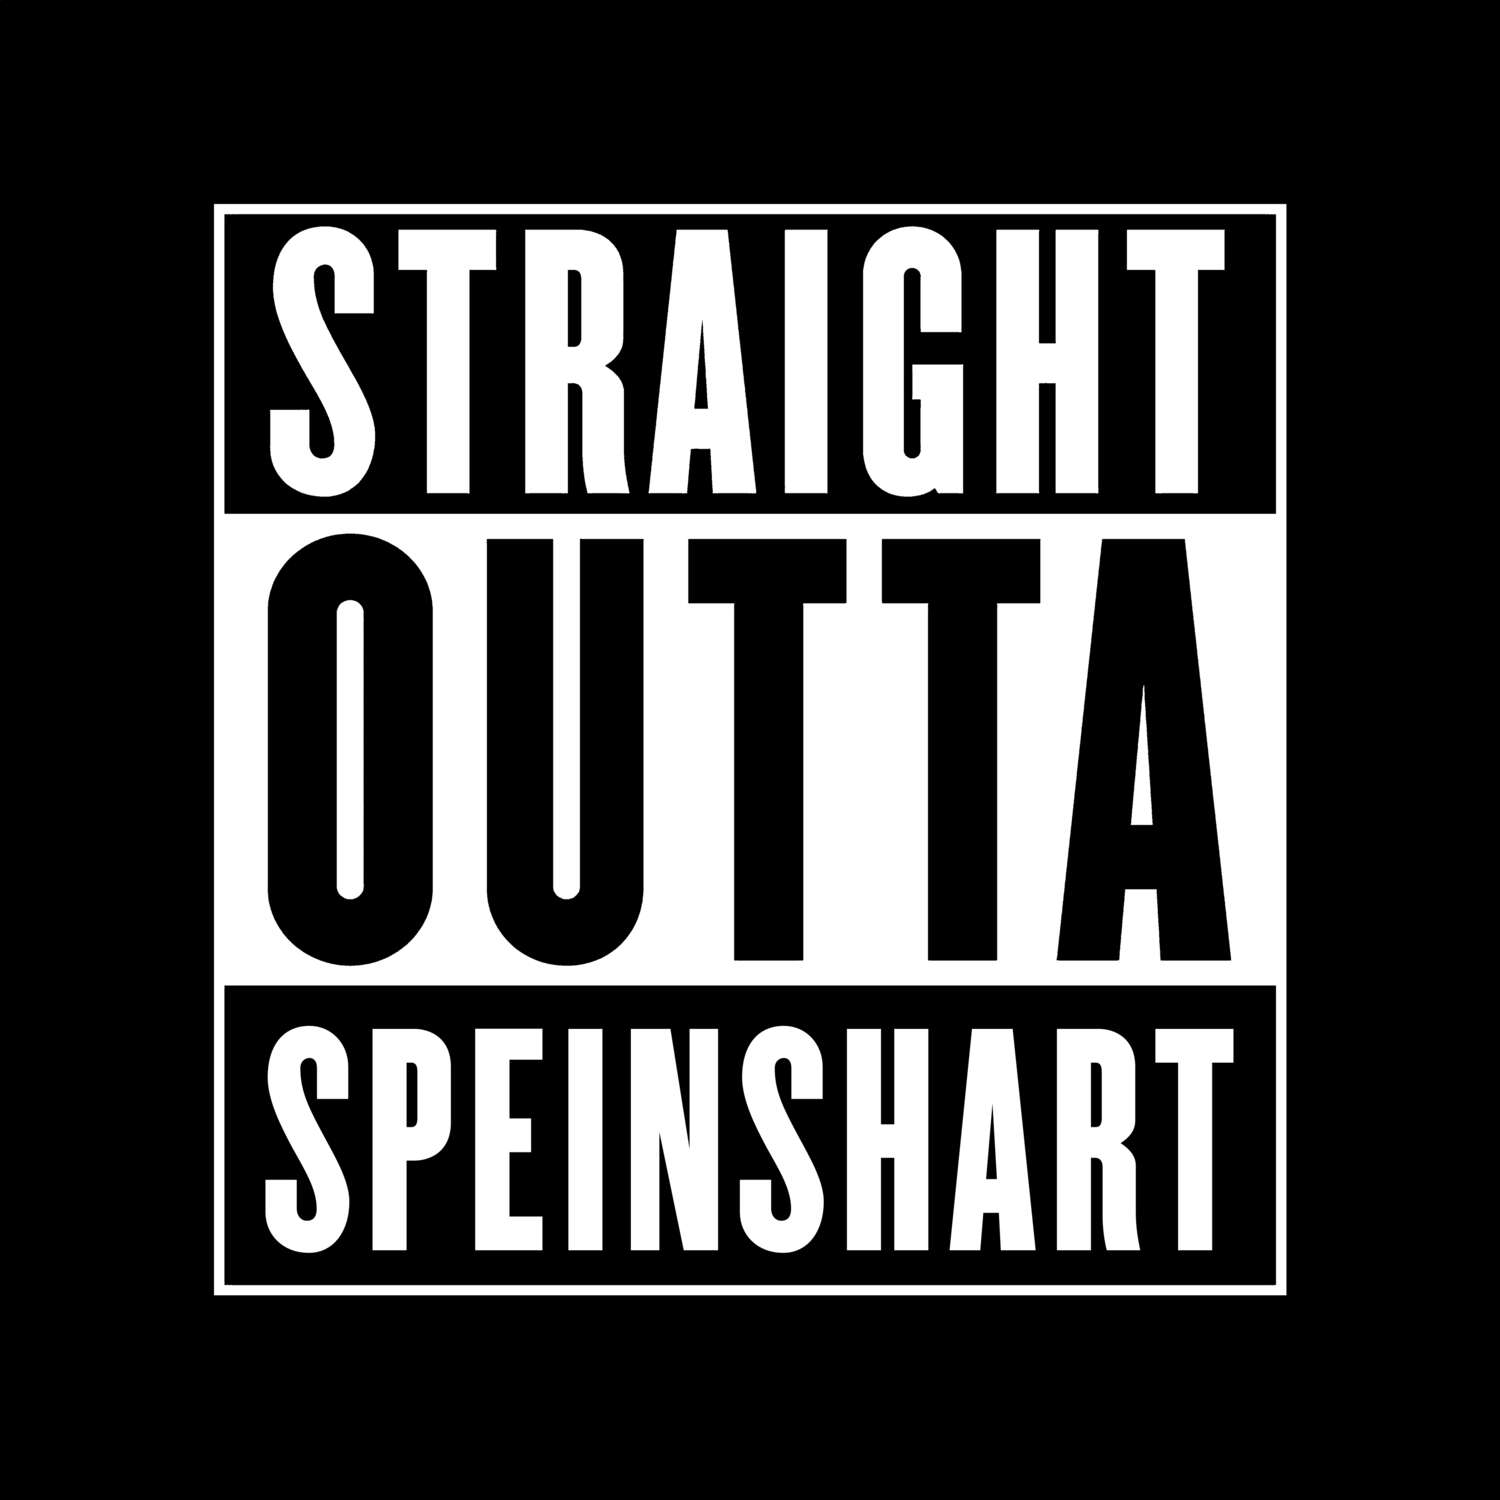 Speinshart T-Shirt »Straight Outta«